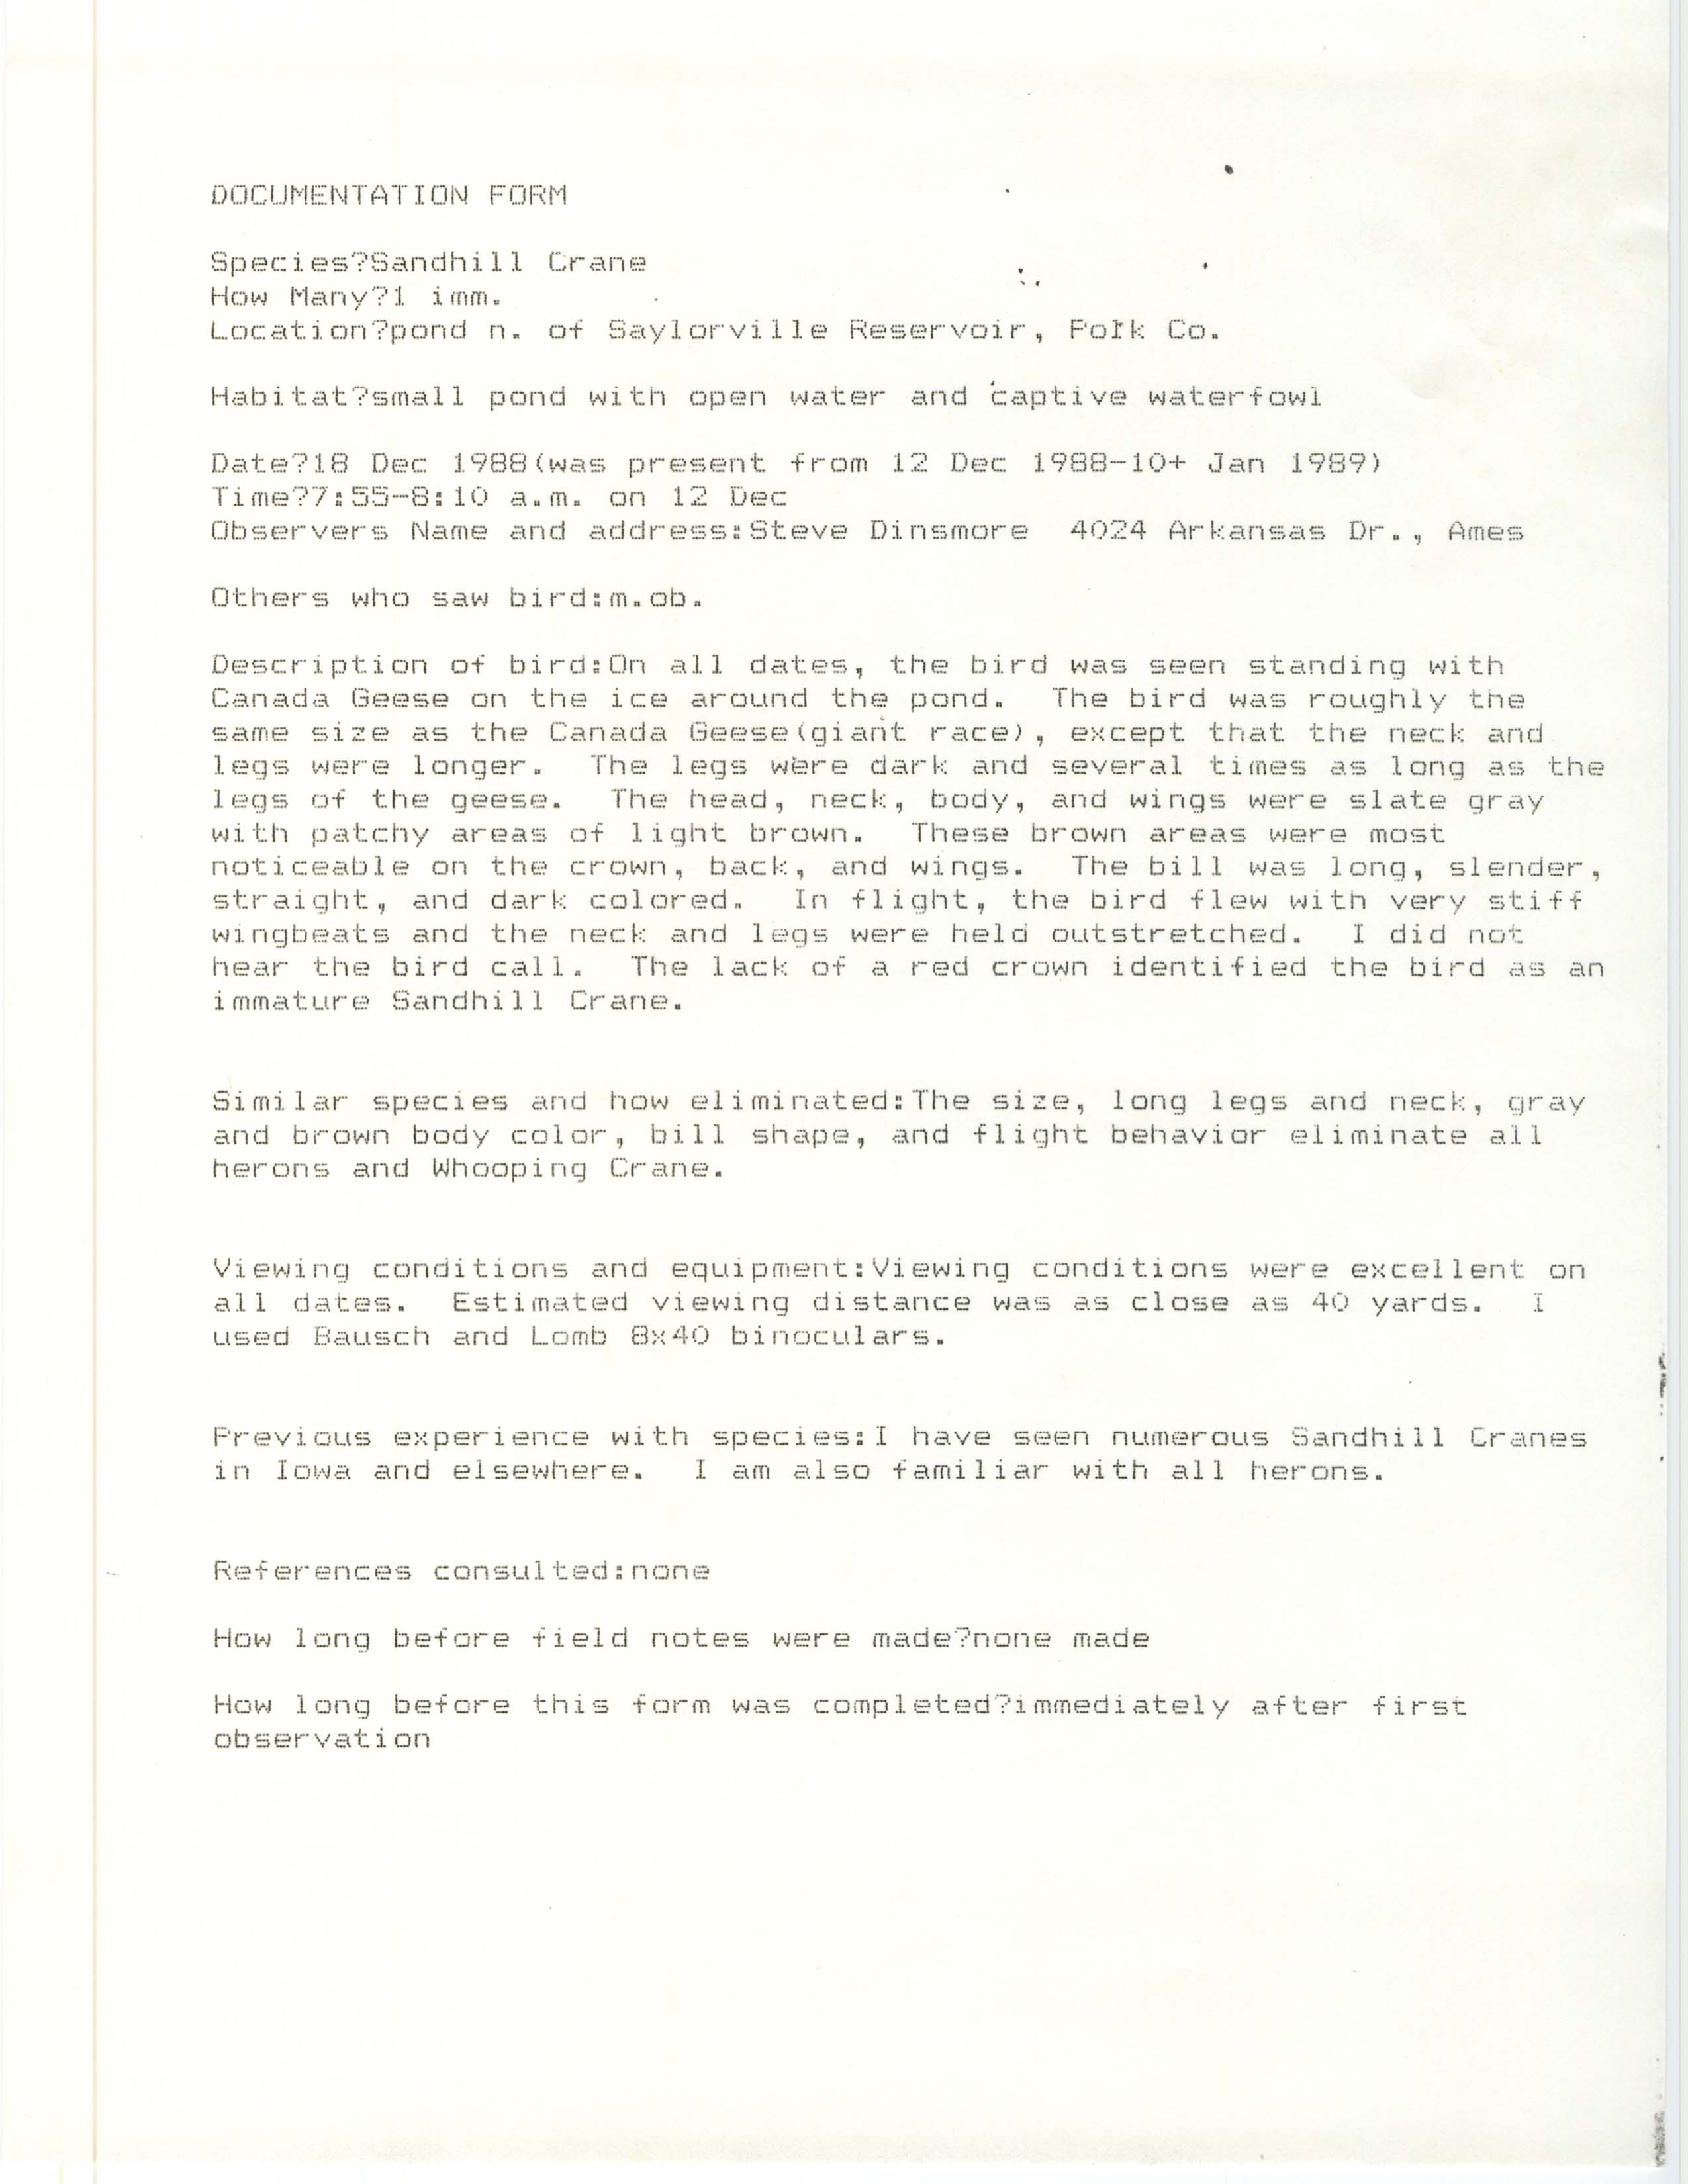 Rare bird documentation form for Sandhill Crane north of Saylorville Reservoir in 1988